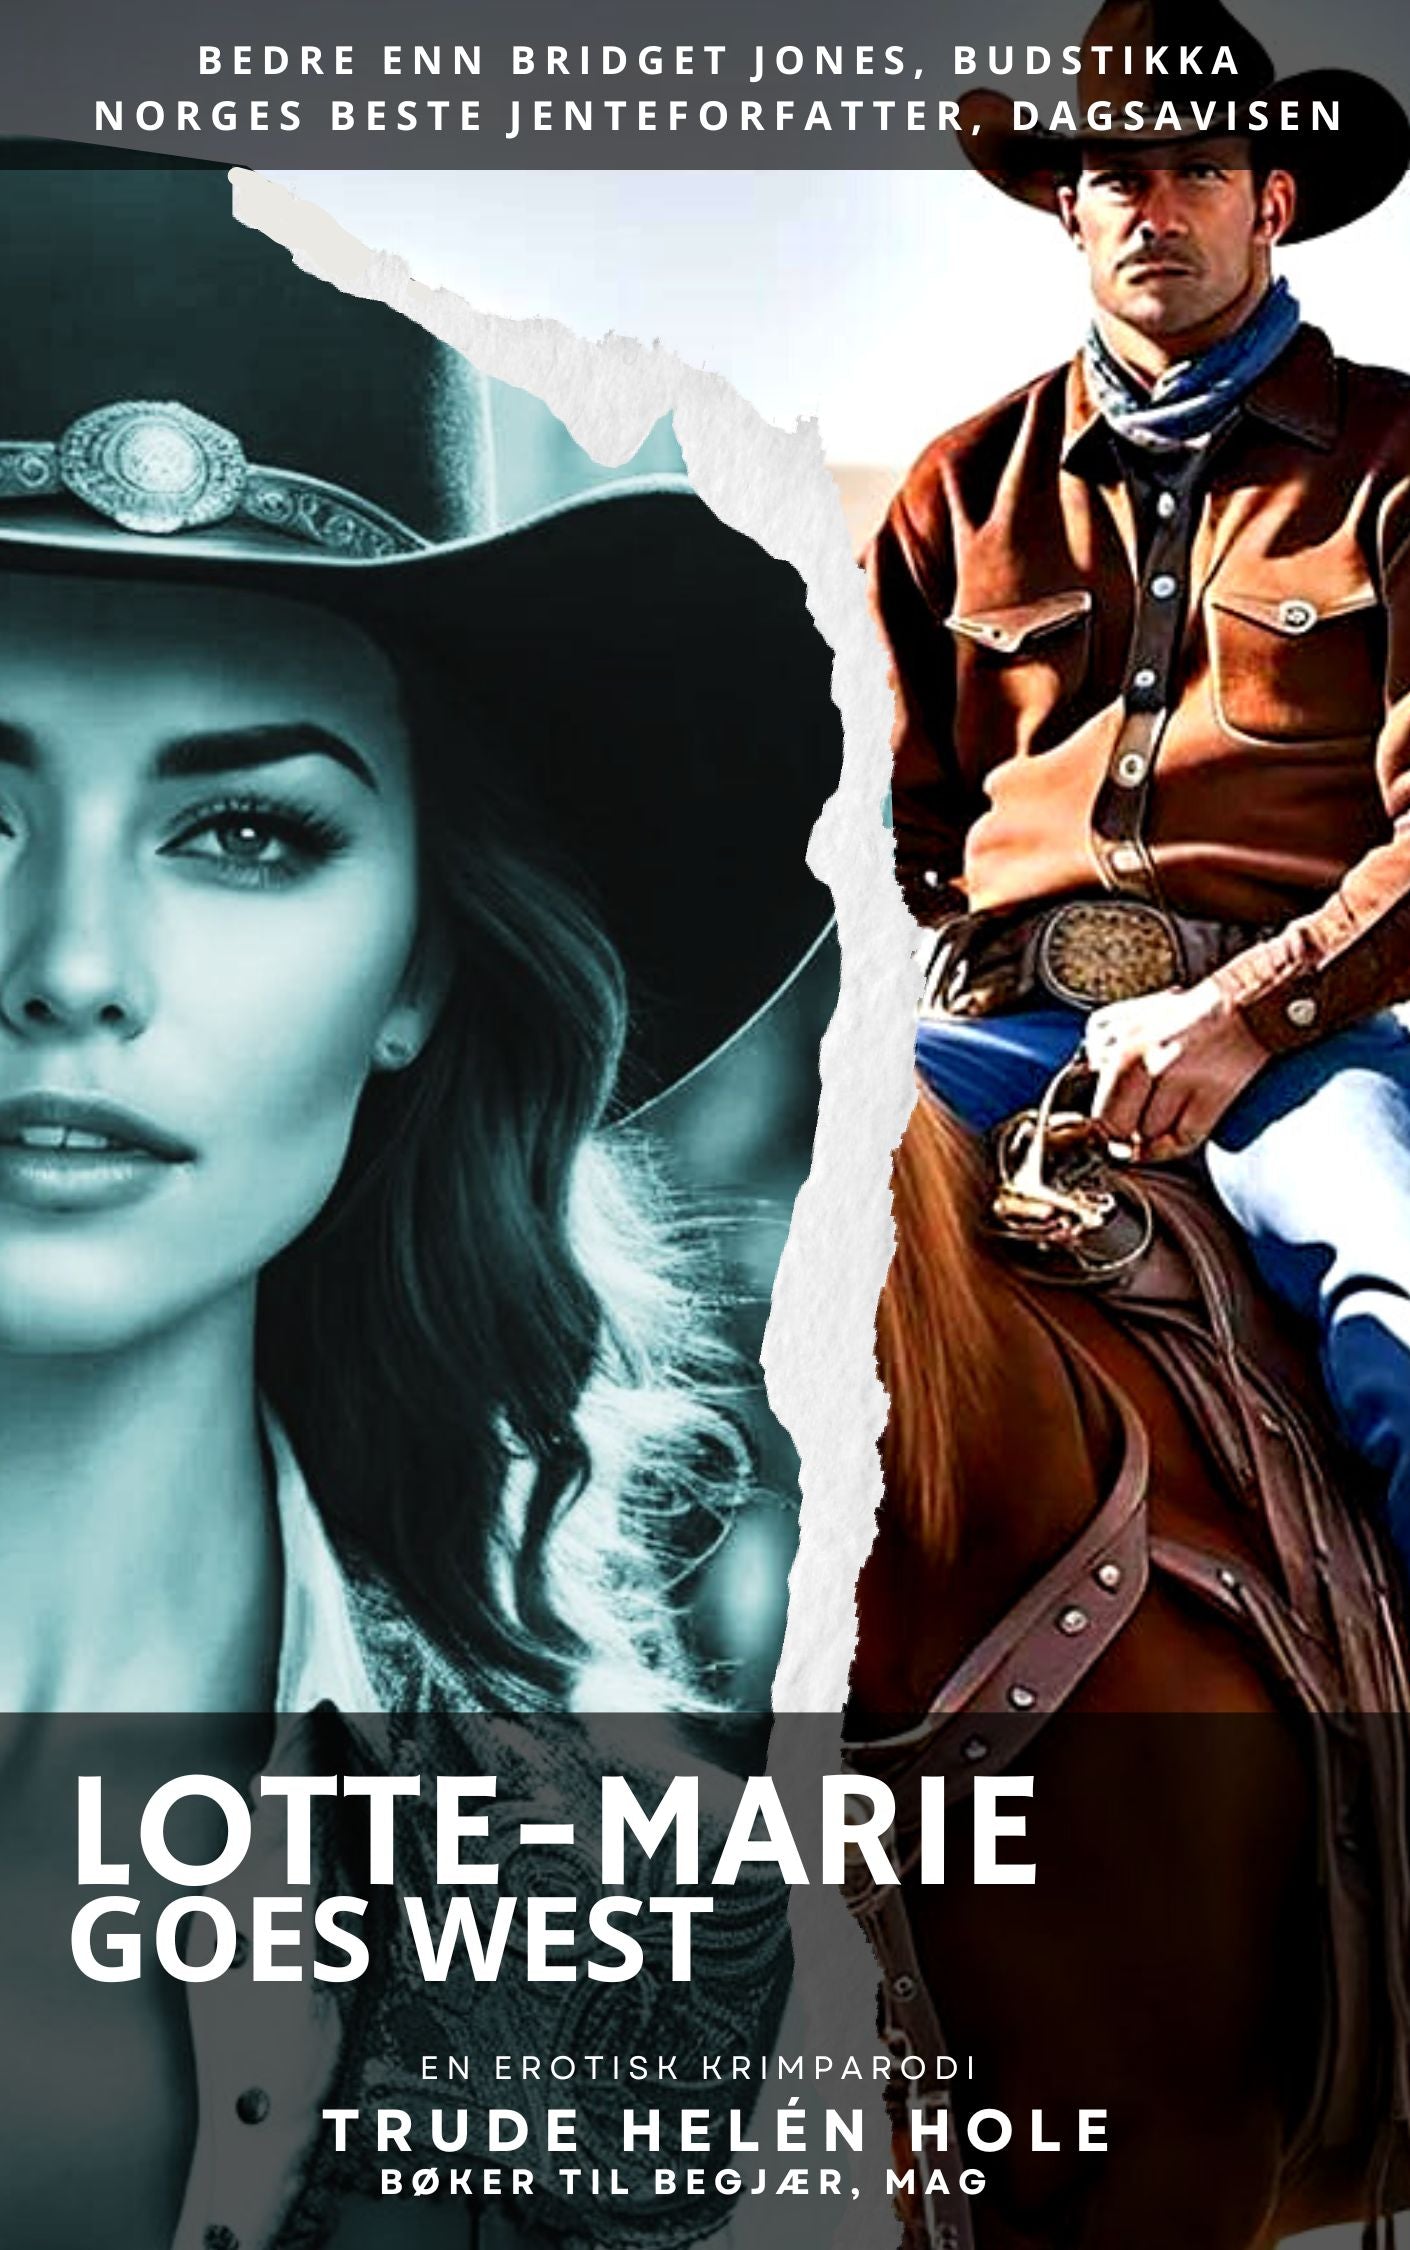 Lotte-Marie goes West